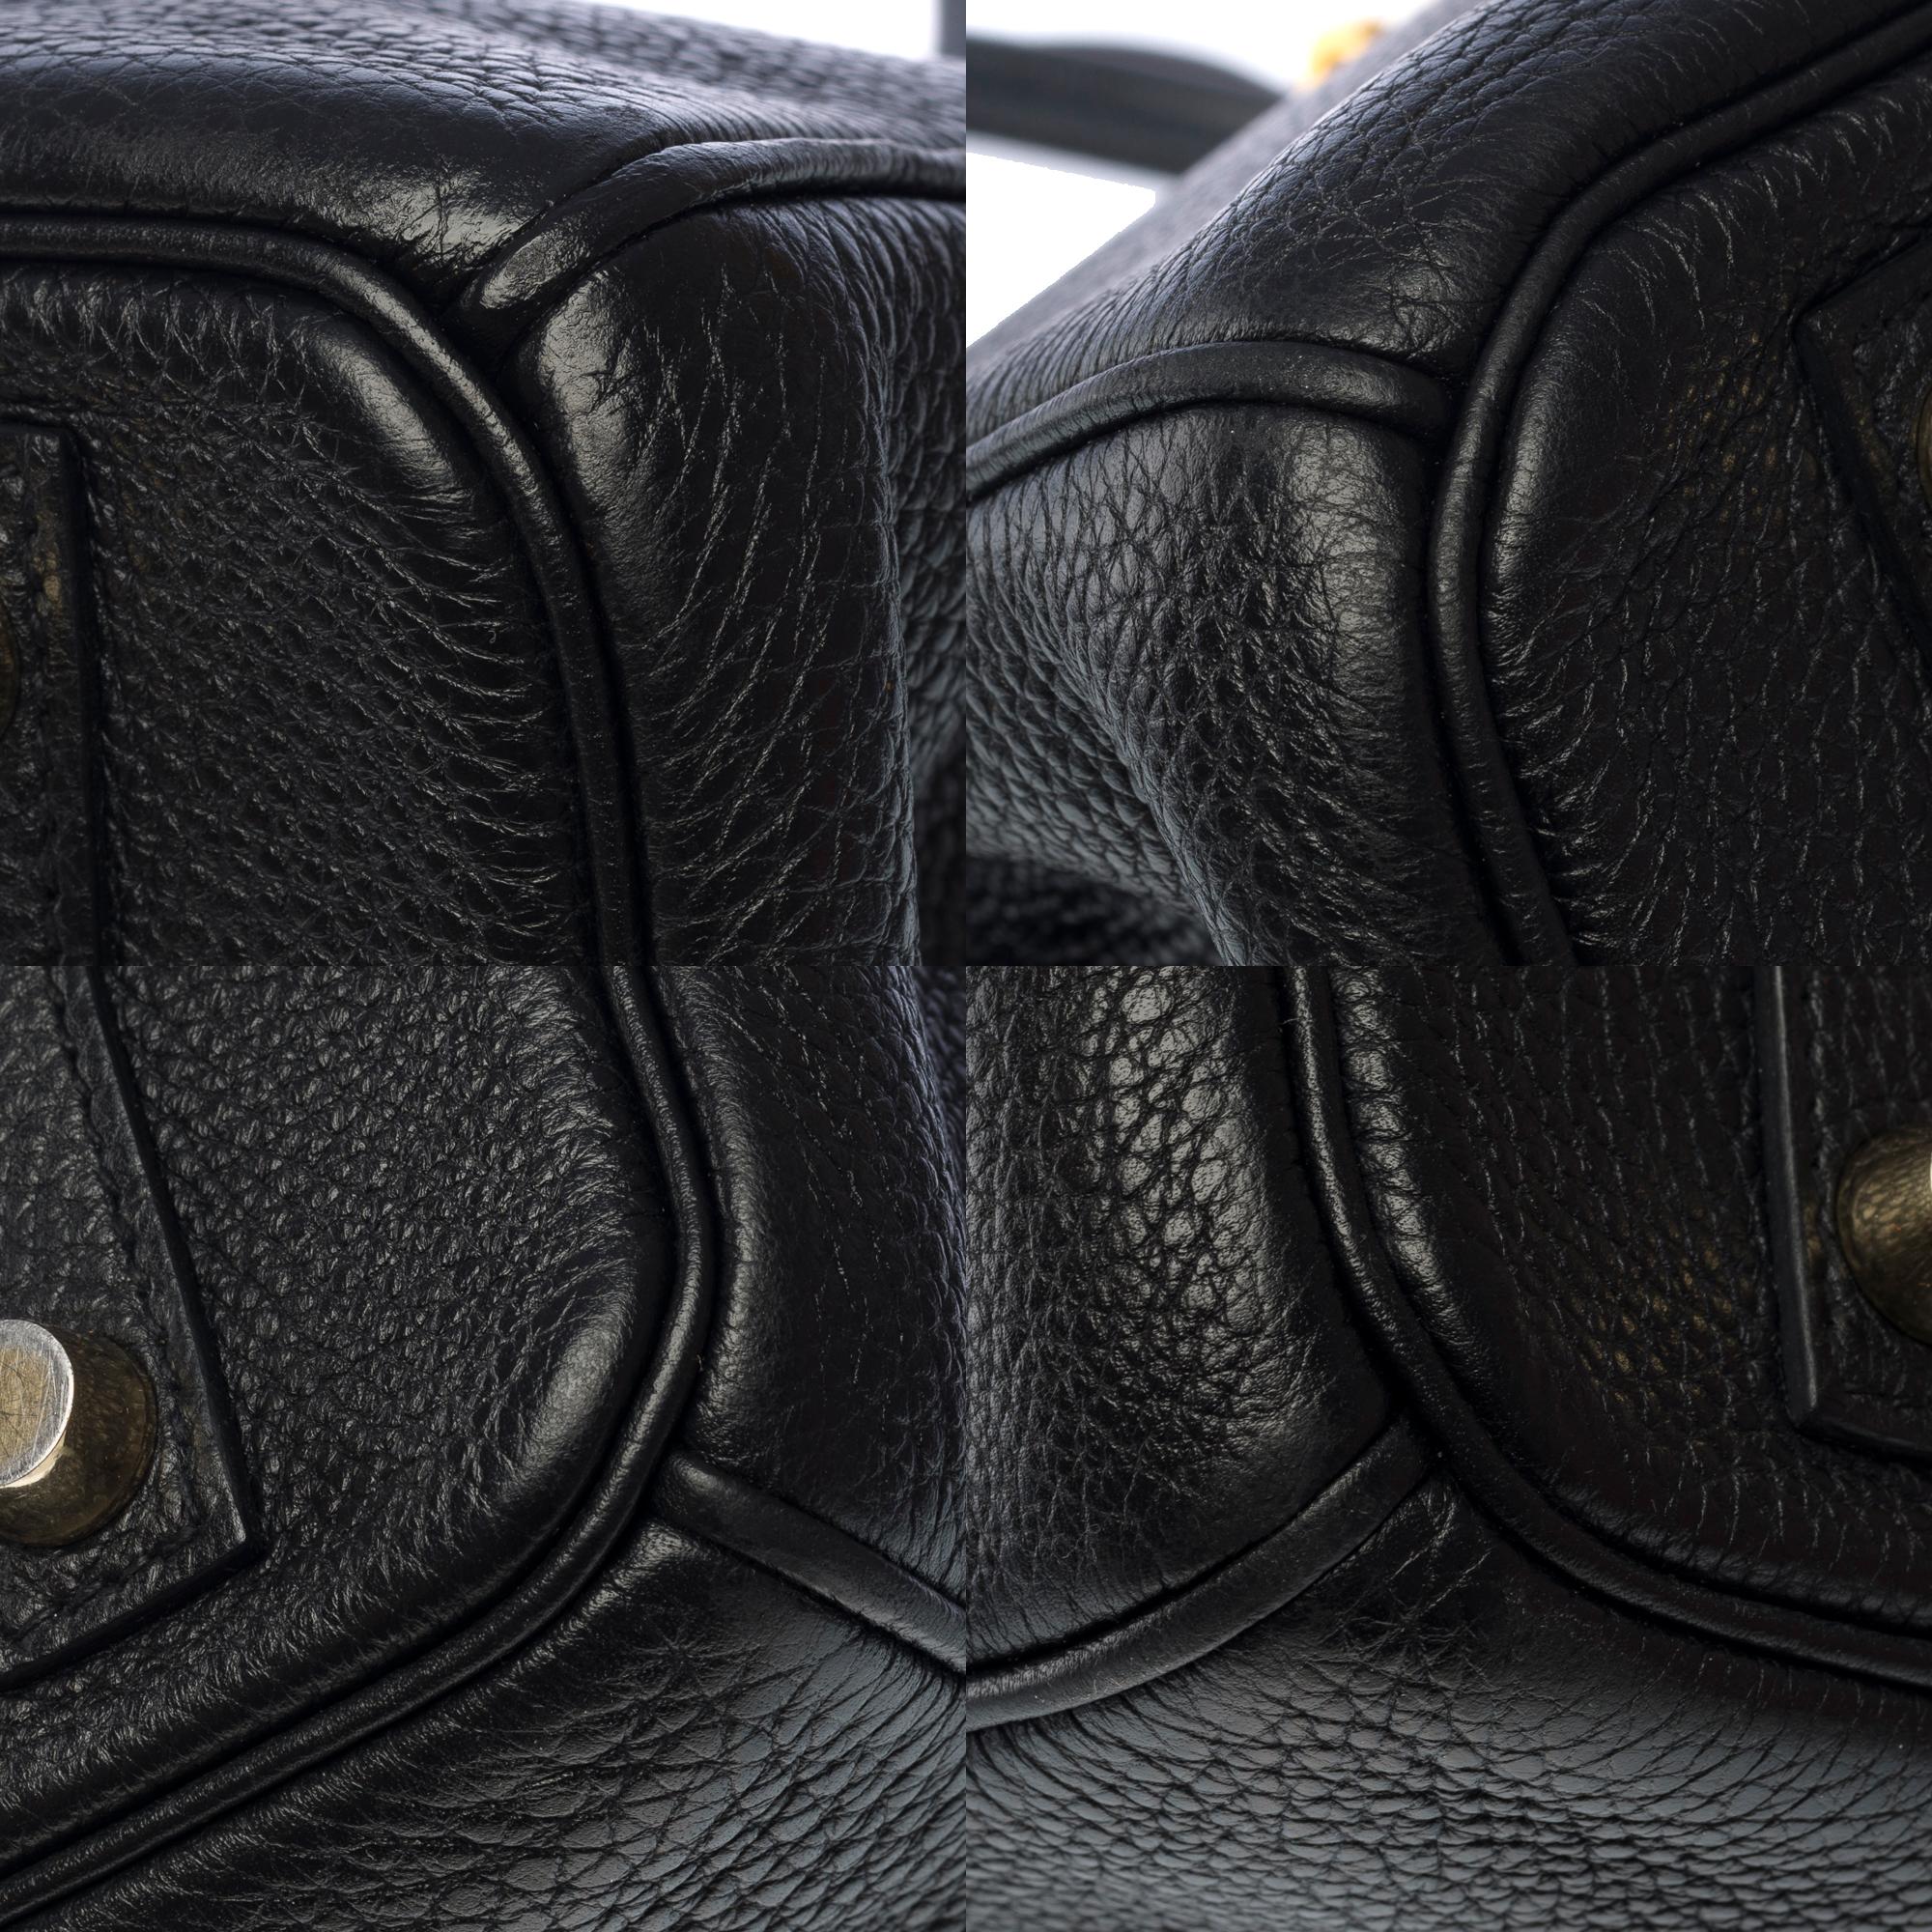 Stunning Hermes Birkin 30 handbag in Black Togo leather, GHW 9